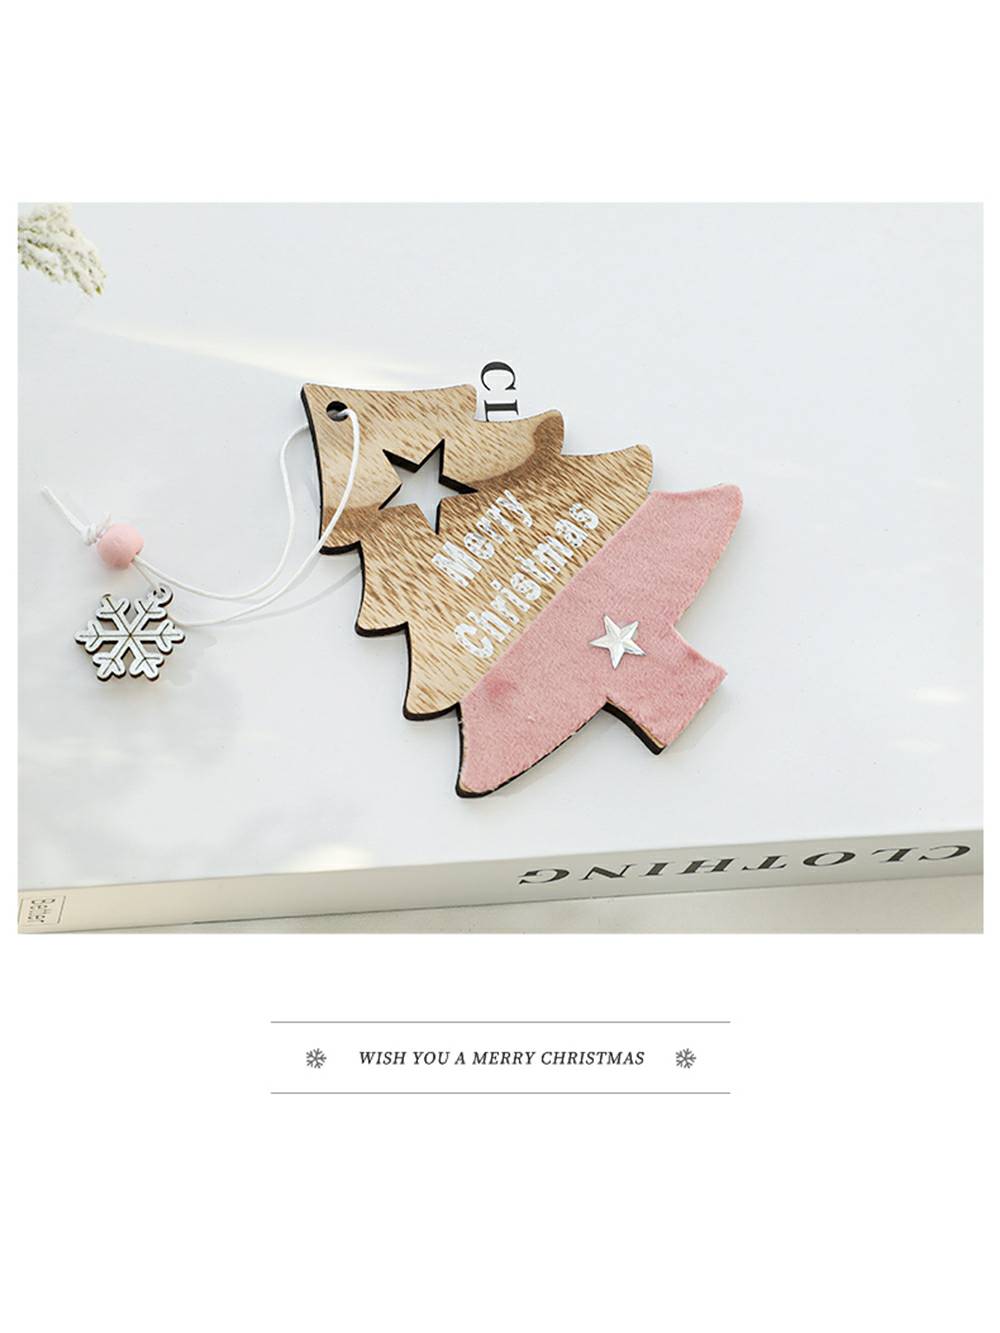 Roze houten rendier en vijfpuntige ster, hangend ornament